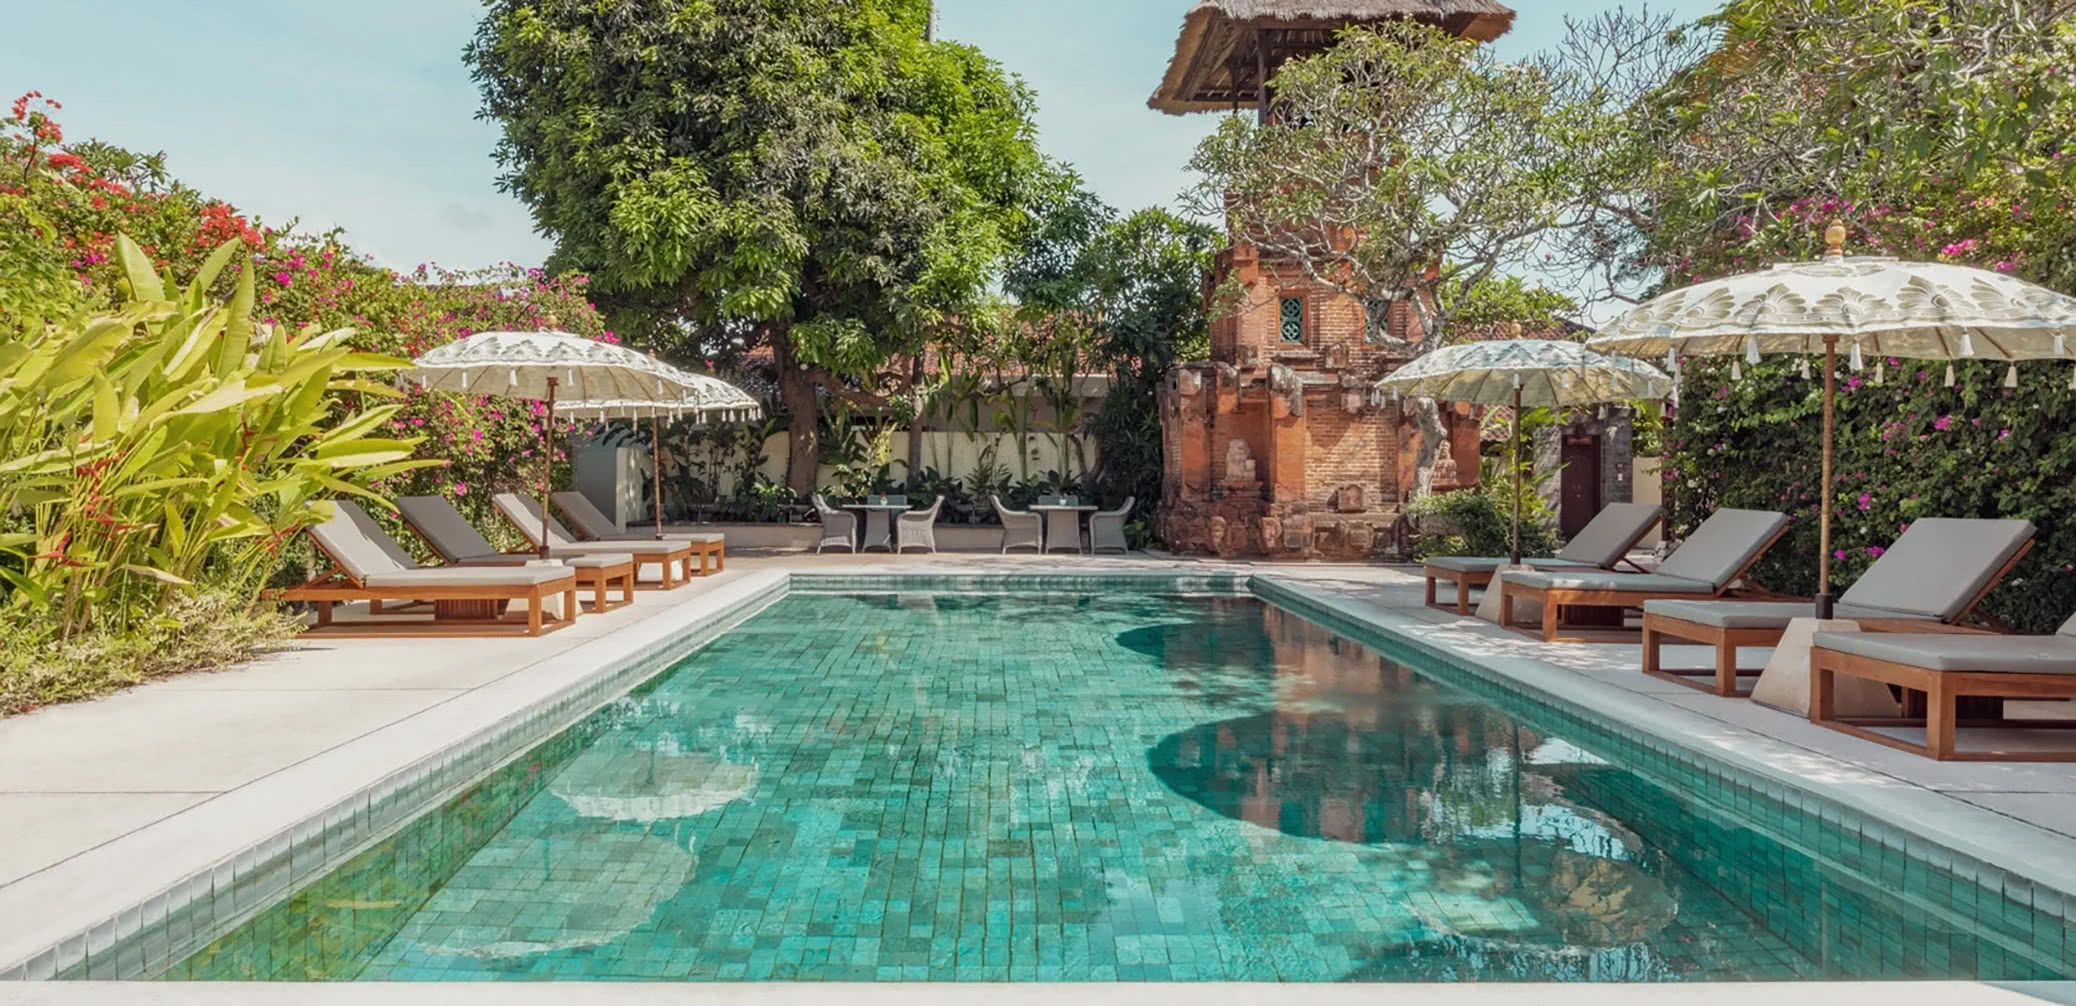 Top 5 Best Honeymoon Hotels in Bali